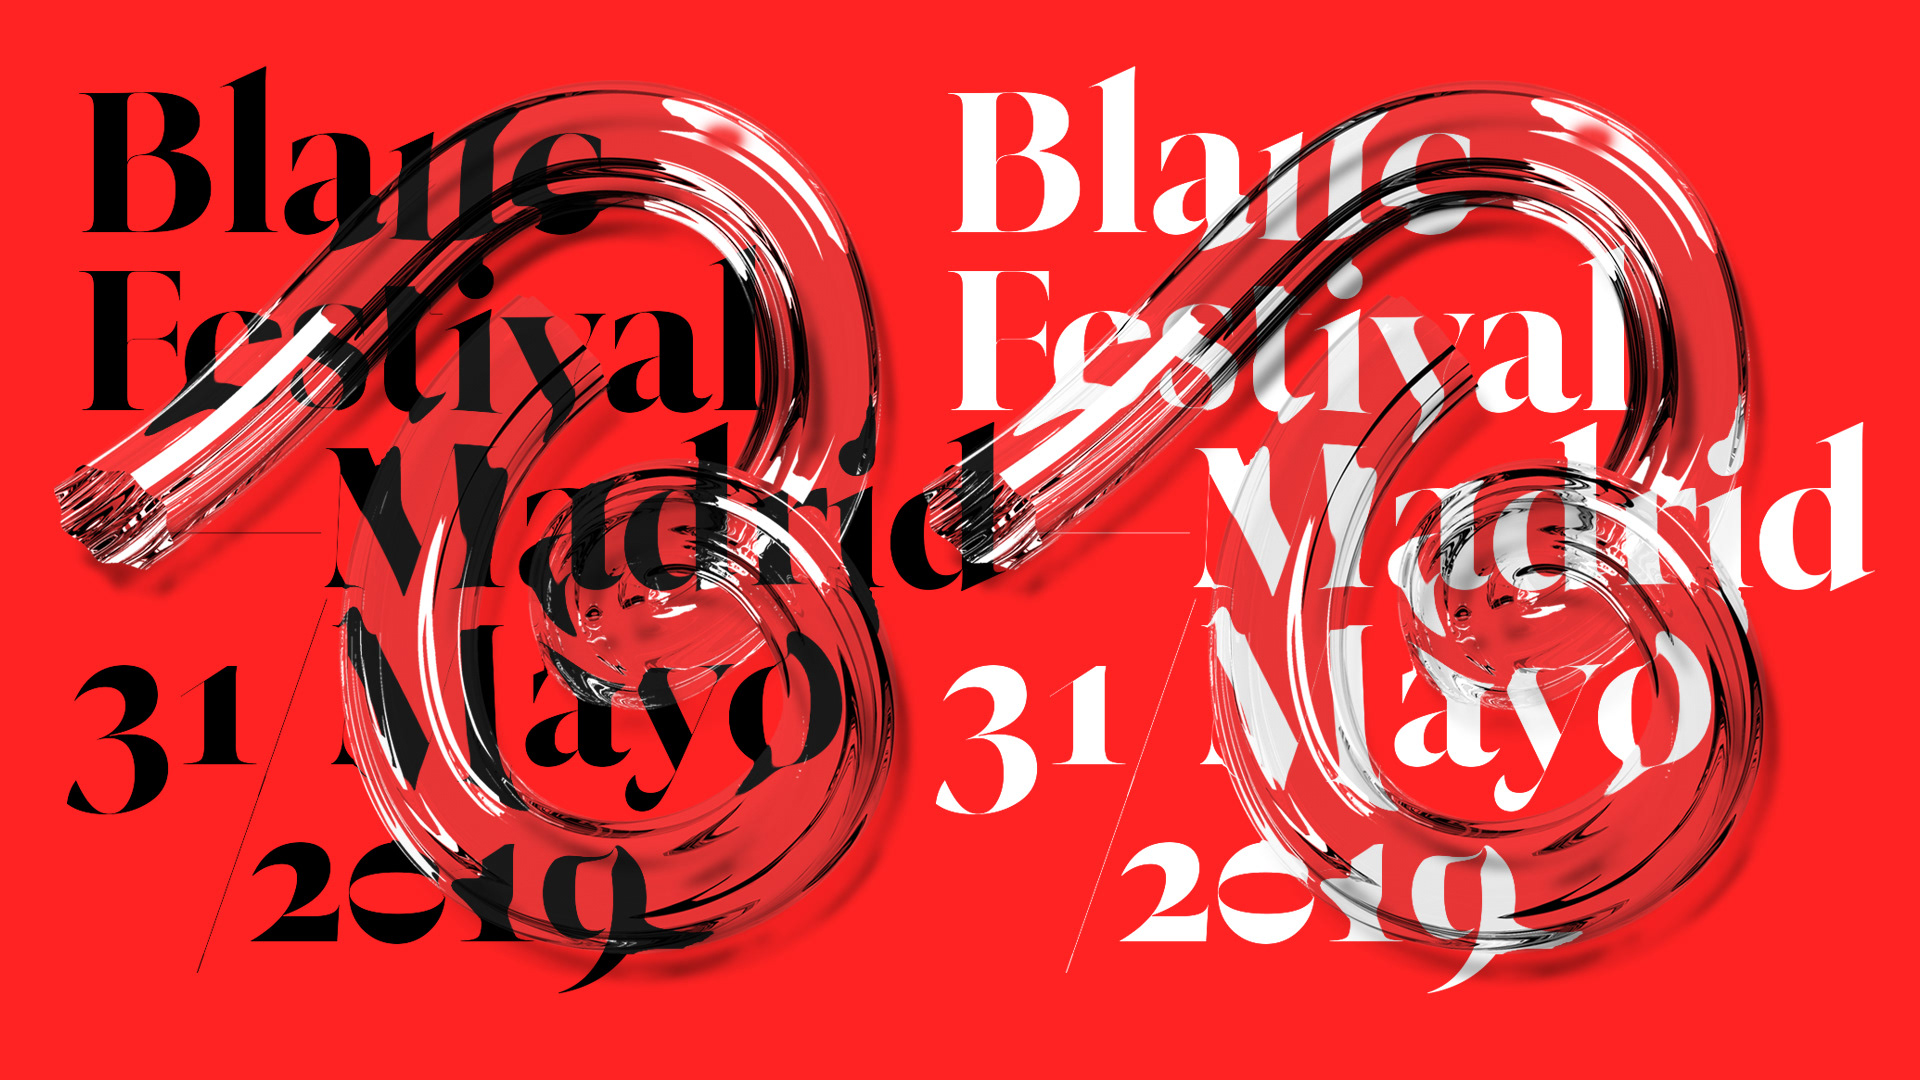 Blanc Festival 19 Identity1d6d3e83406219.5d3b1038eb3cb.jpg